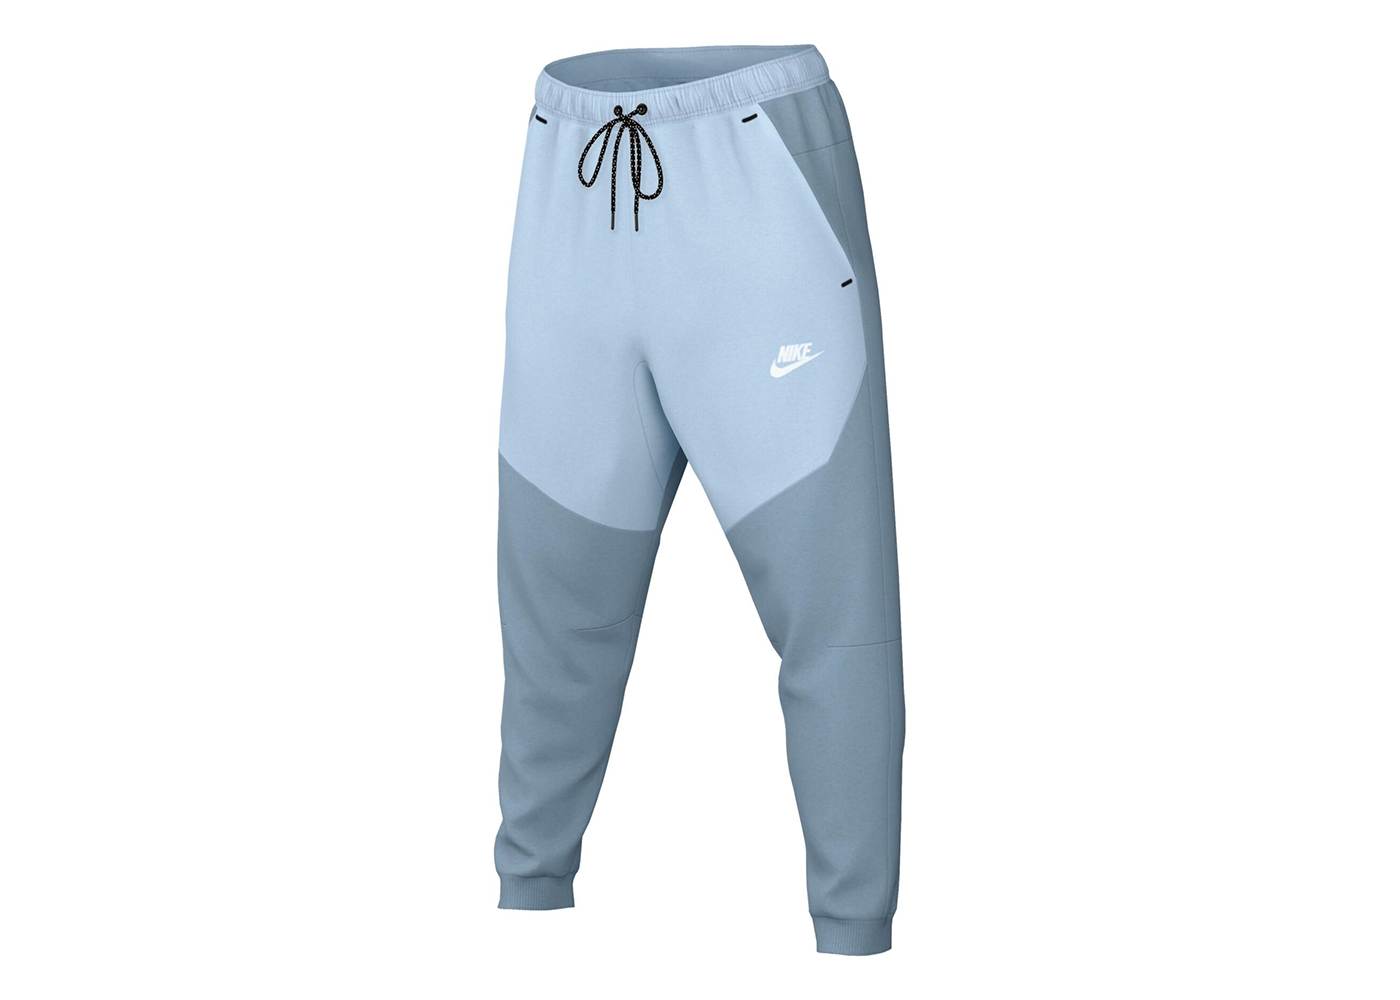 Nike Tech Fleece Joggers Pants Cuffed Cerulean Blue Multiple Sizes  CU4495-424 | eBay